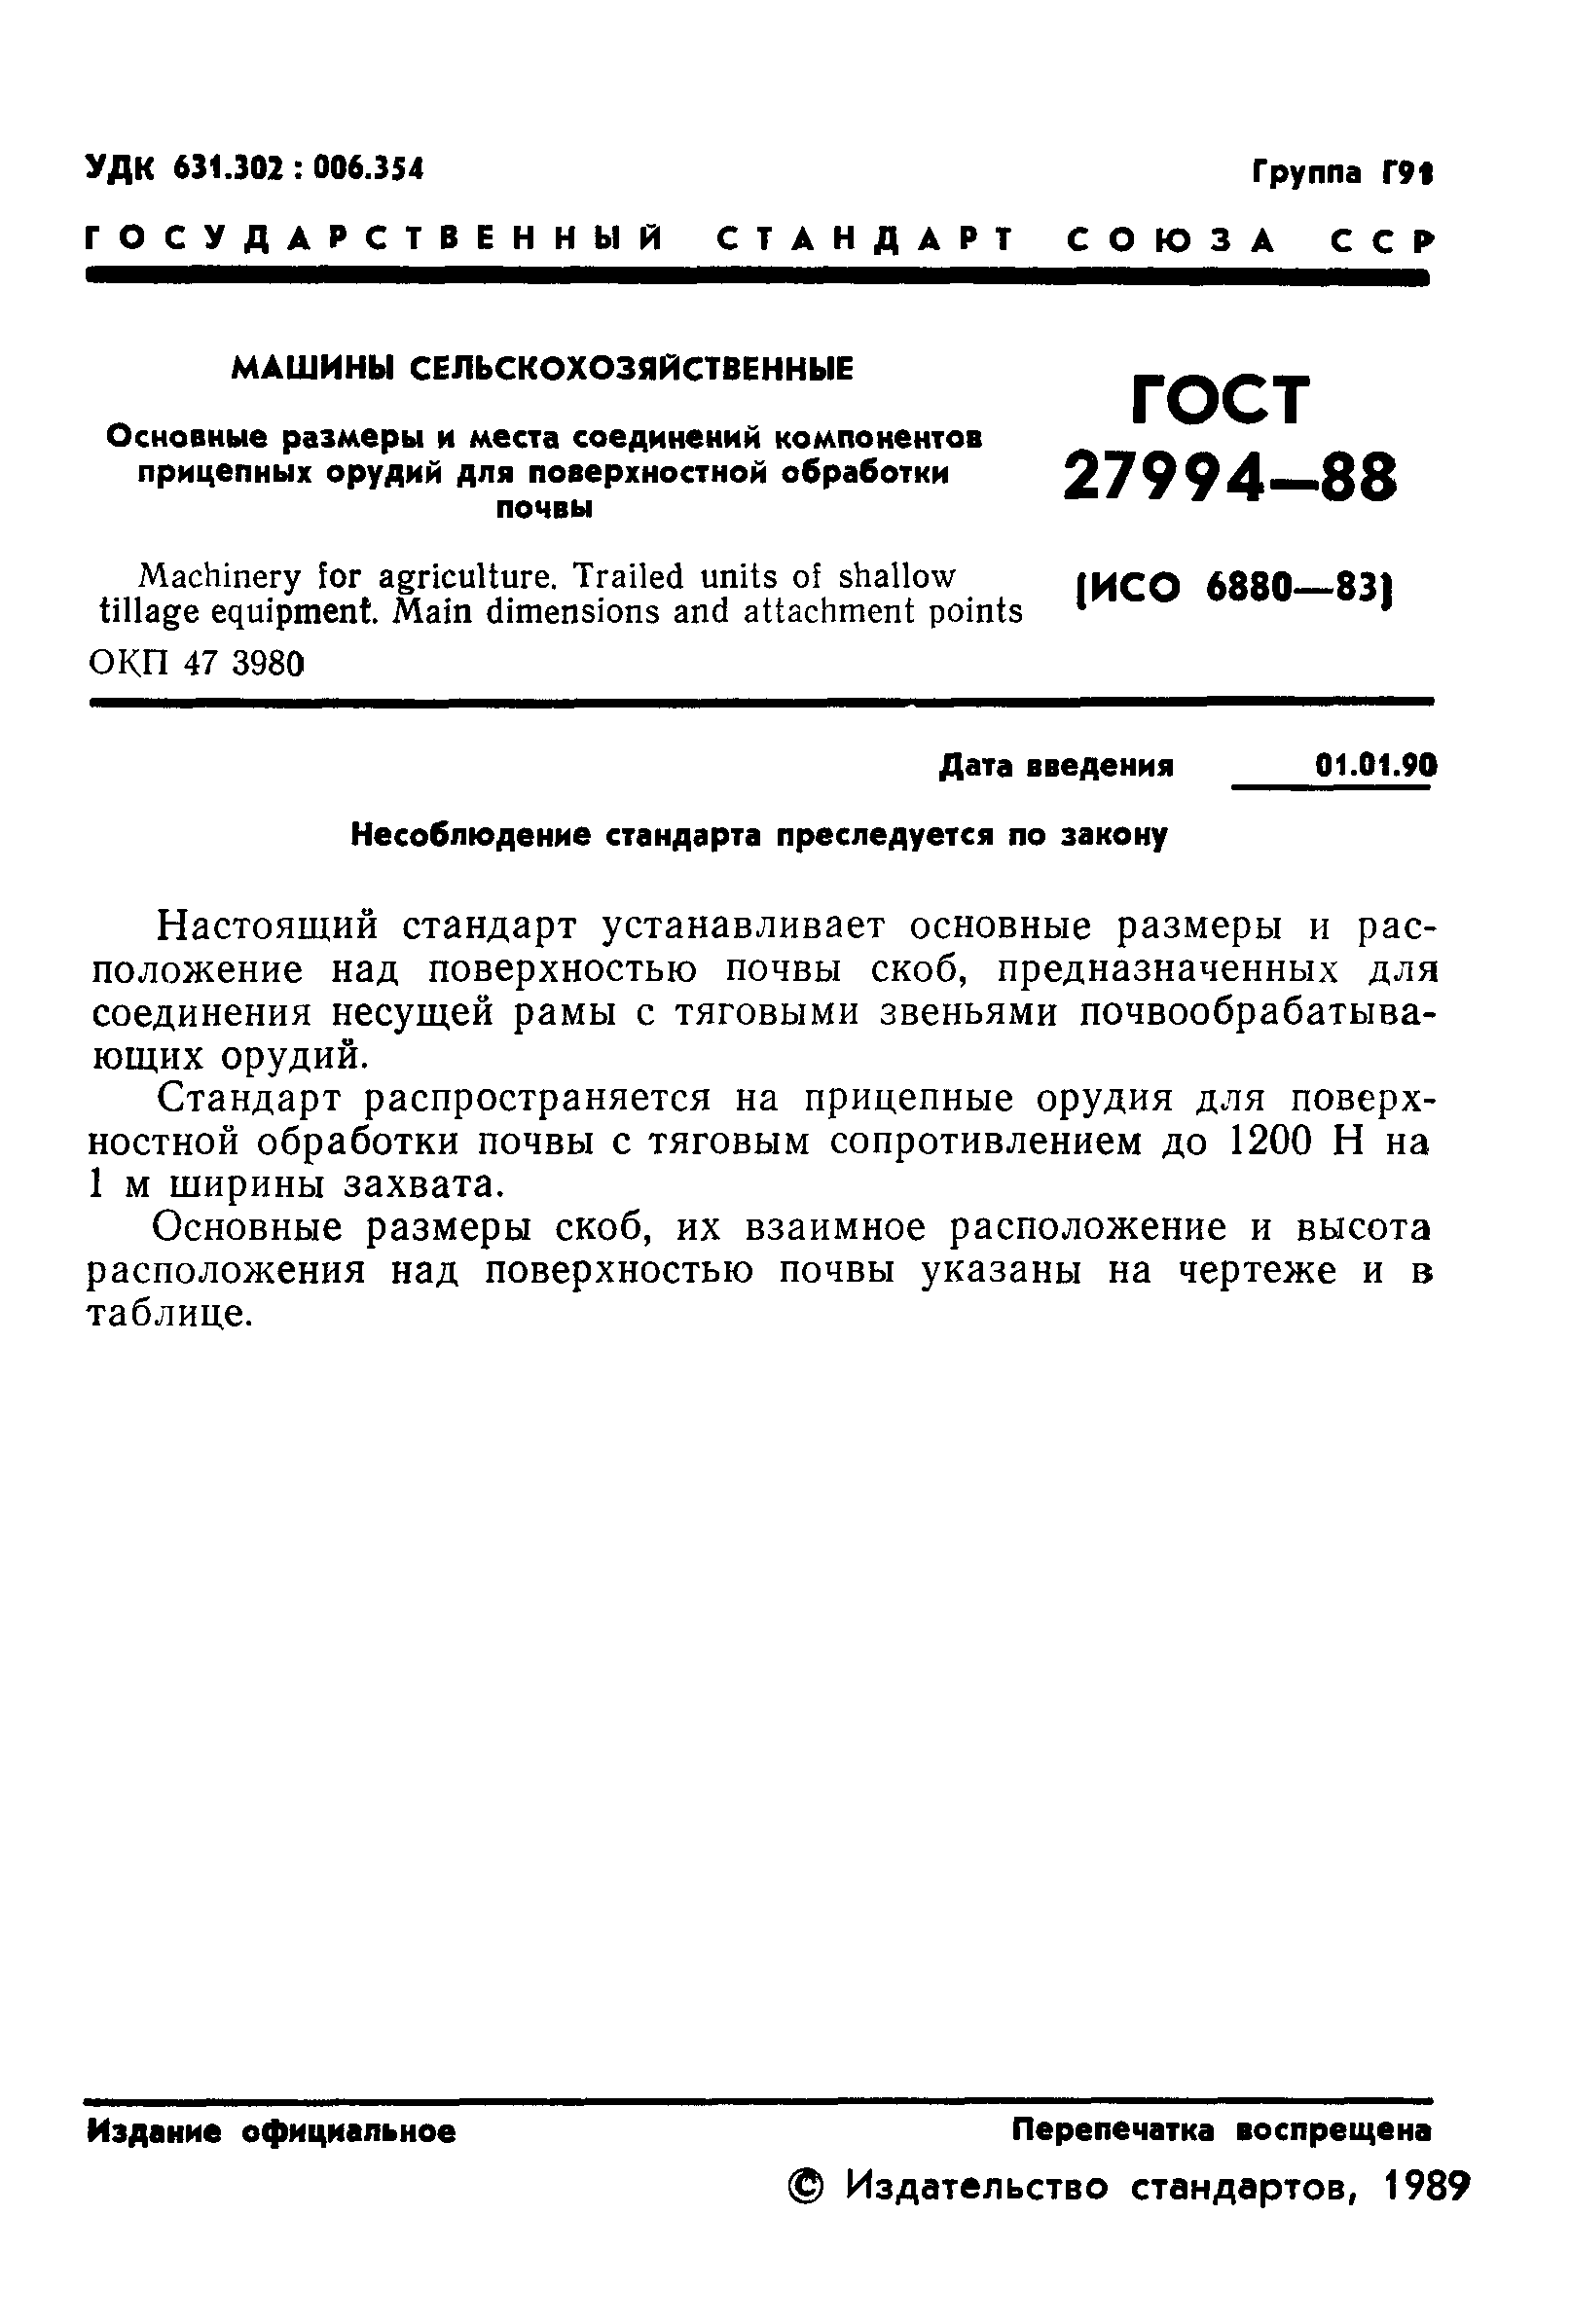 ГОСТ 27994-88